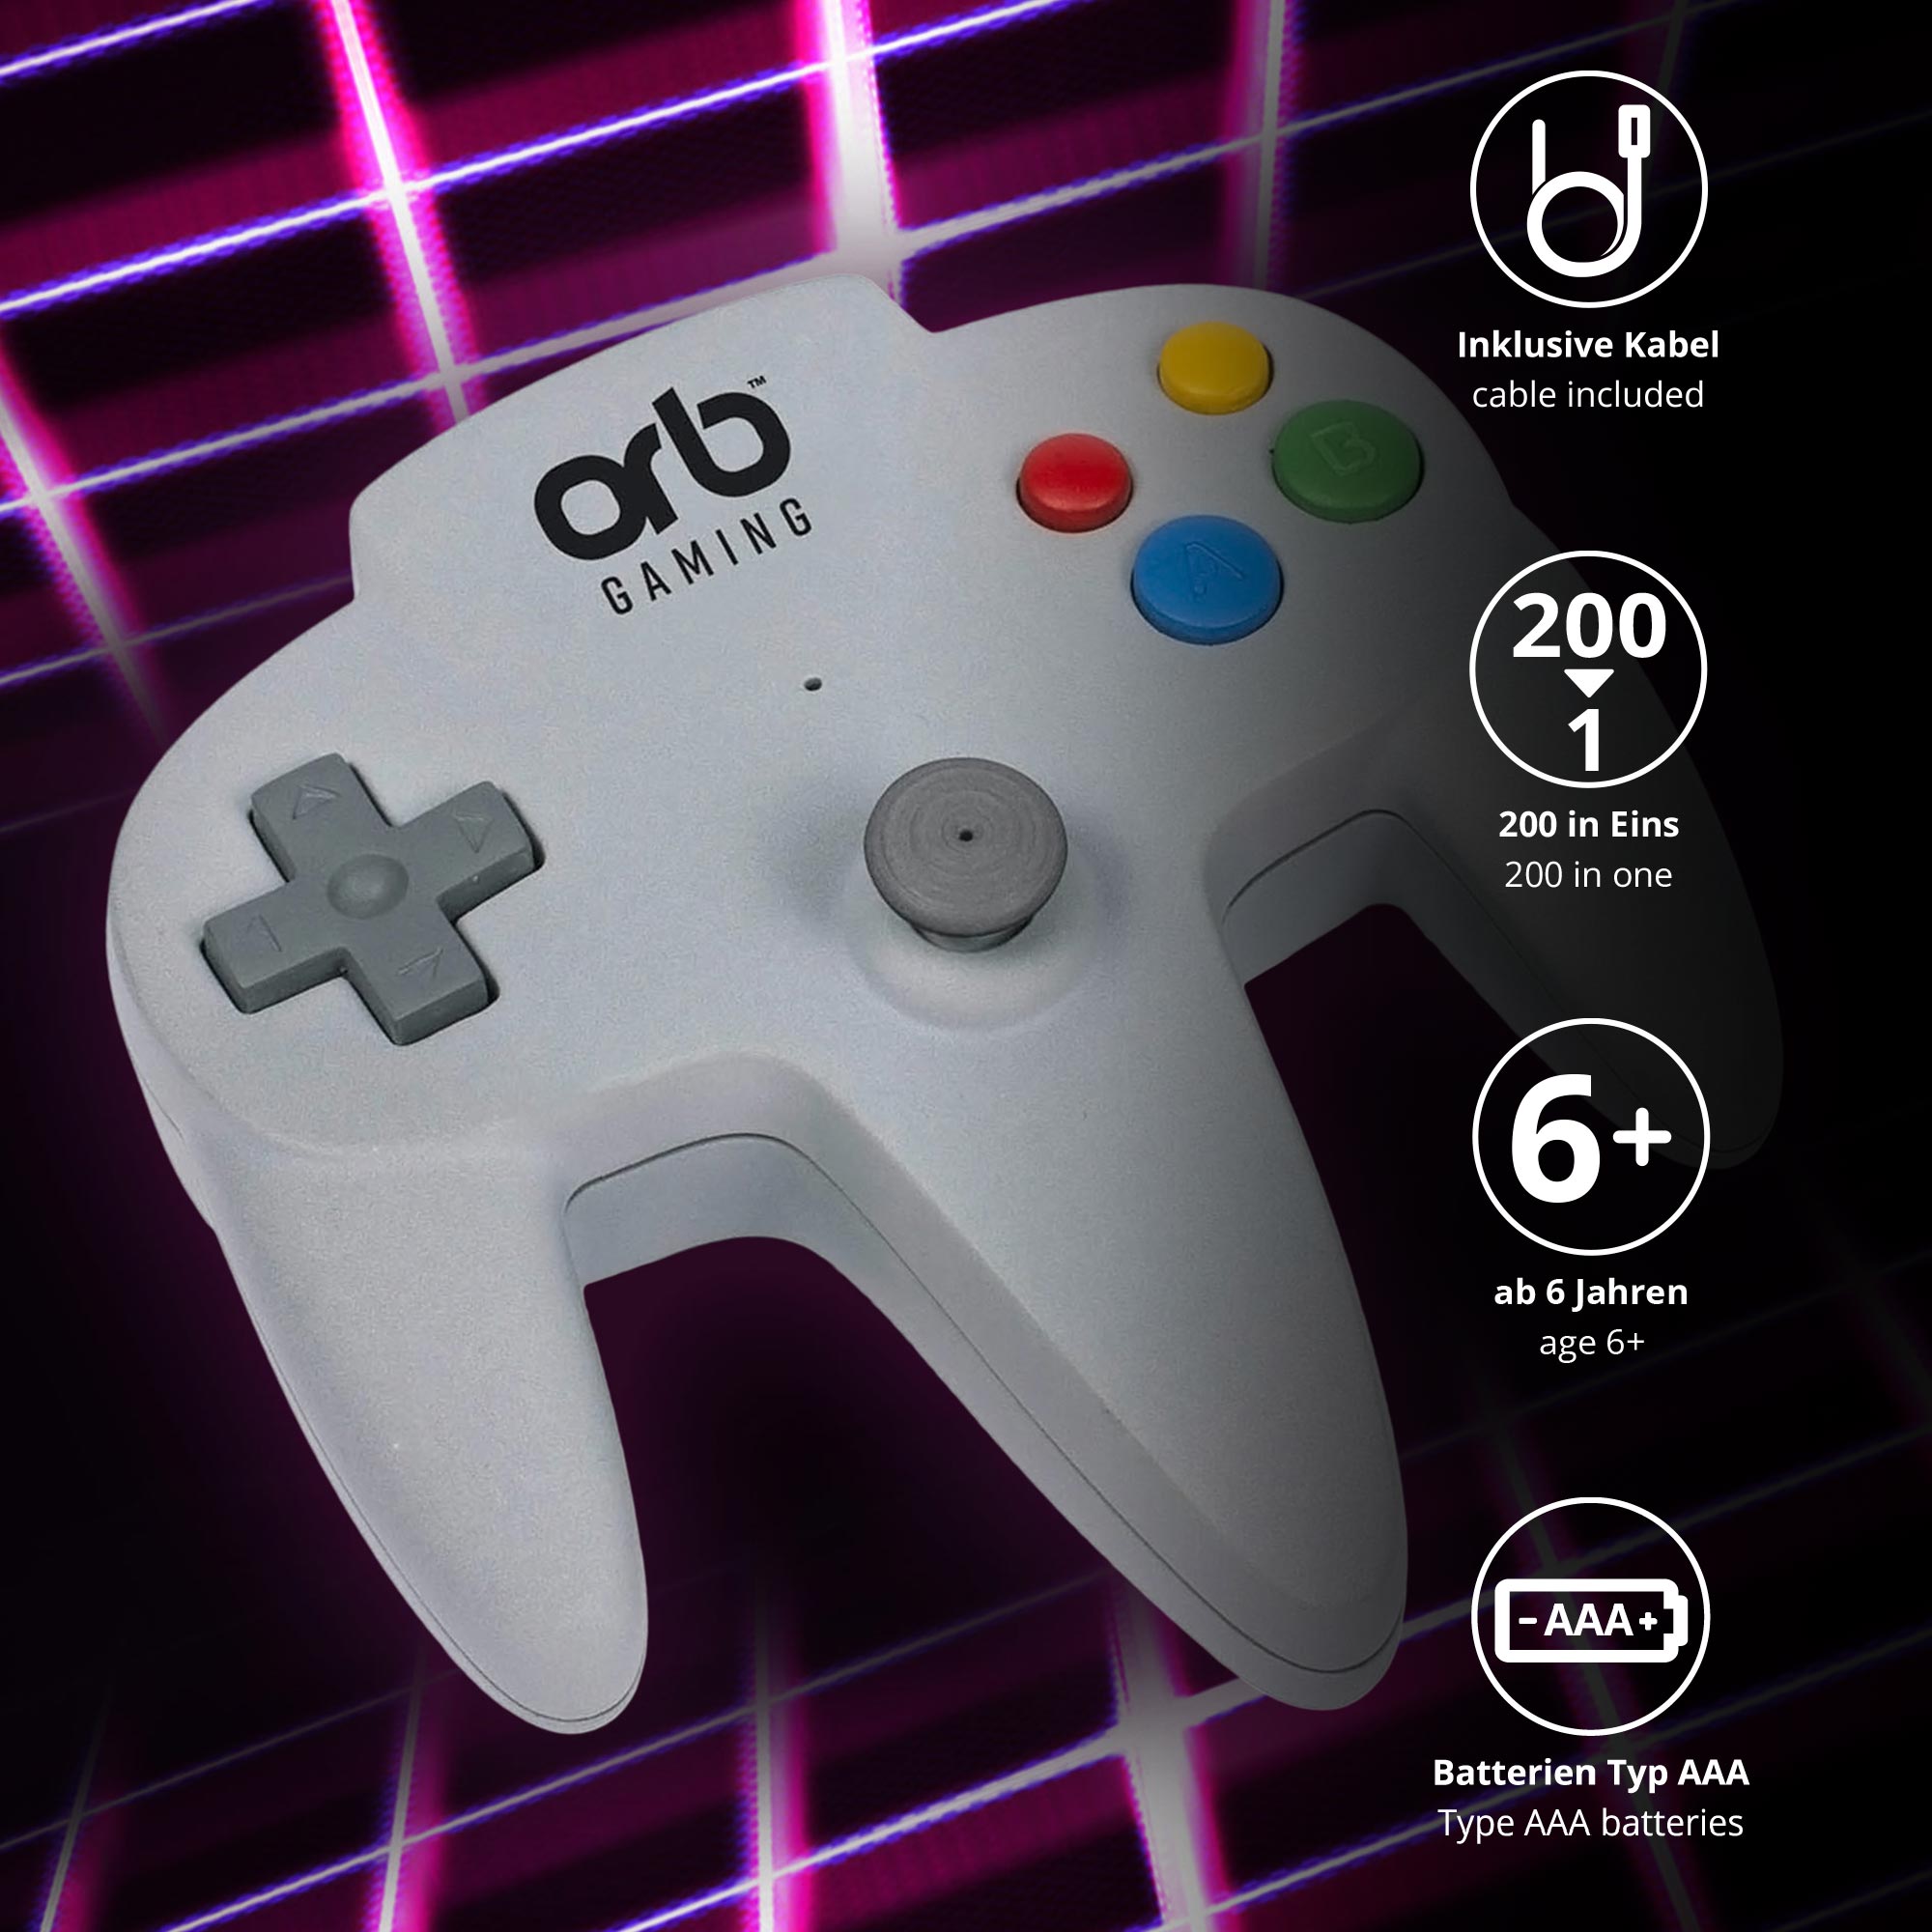 Retro Game Controller - 200 Arcade Spiele